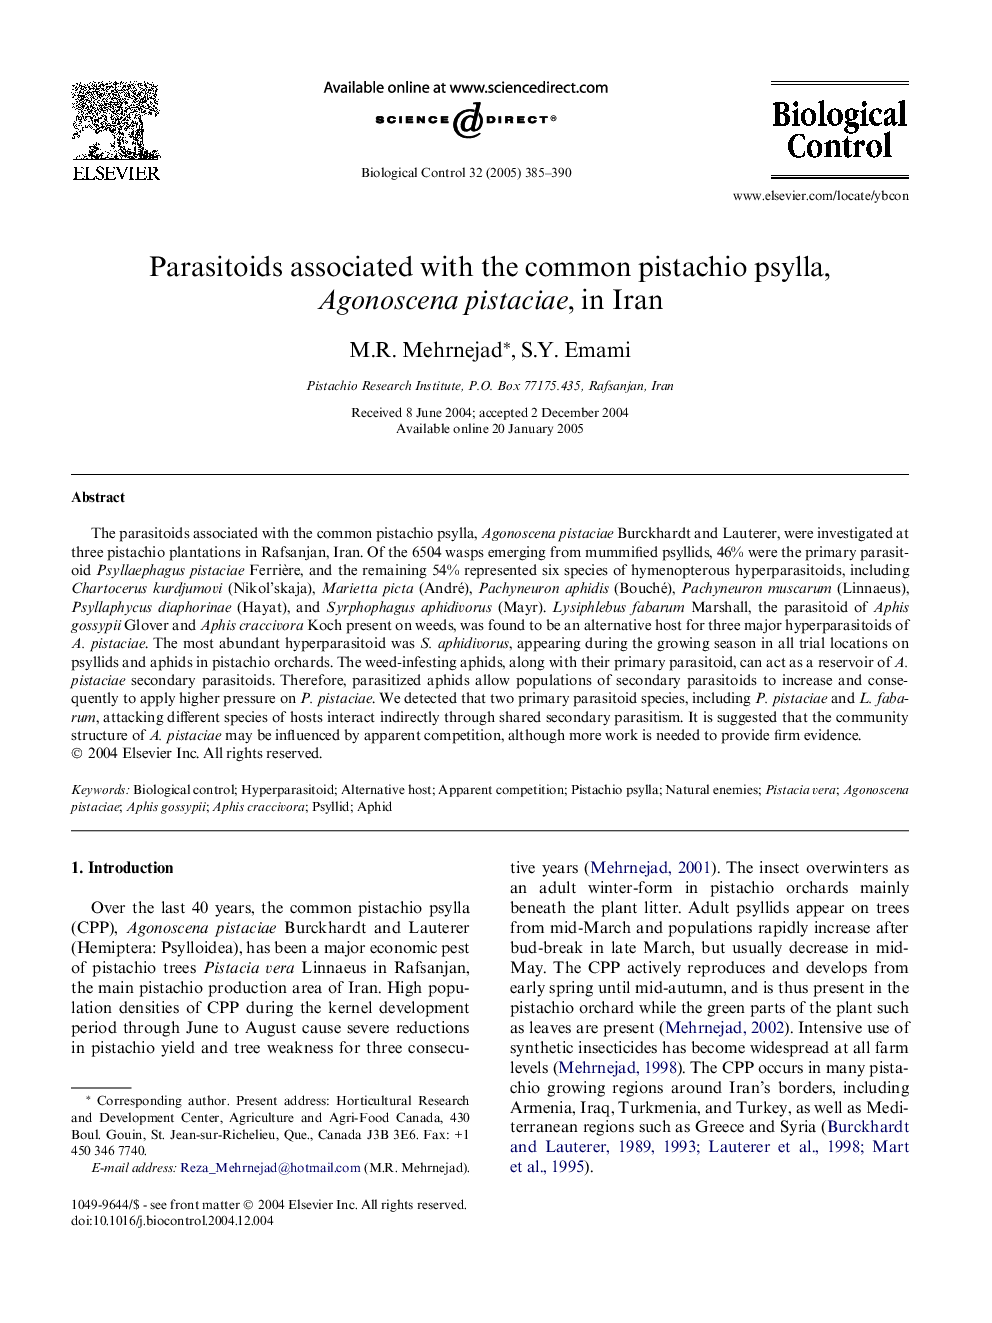 Parasitoids associated with the common pistachio psylla, Agonoscena pistaciae, in Iran